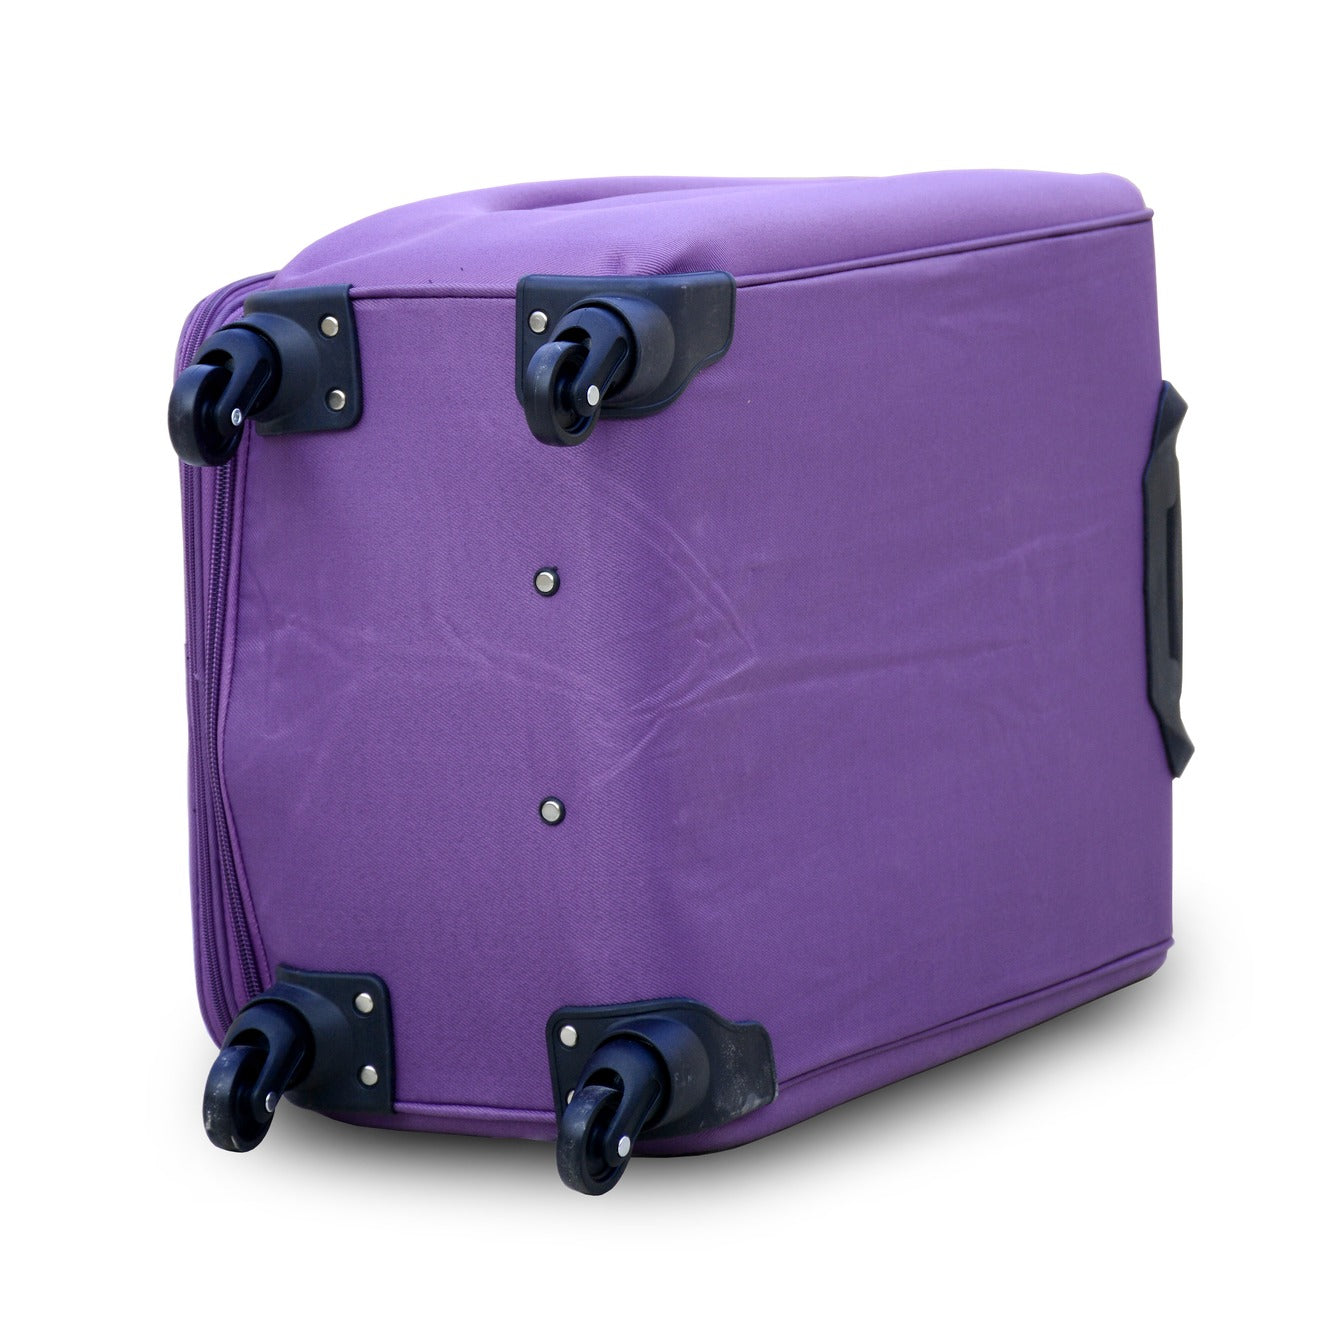 24" Purple Colour SJ JIAN 4 Wheel Luggage Lightweight Soft Material Trolley Bag Zaappy.com